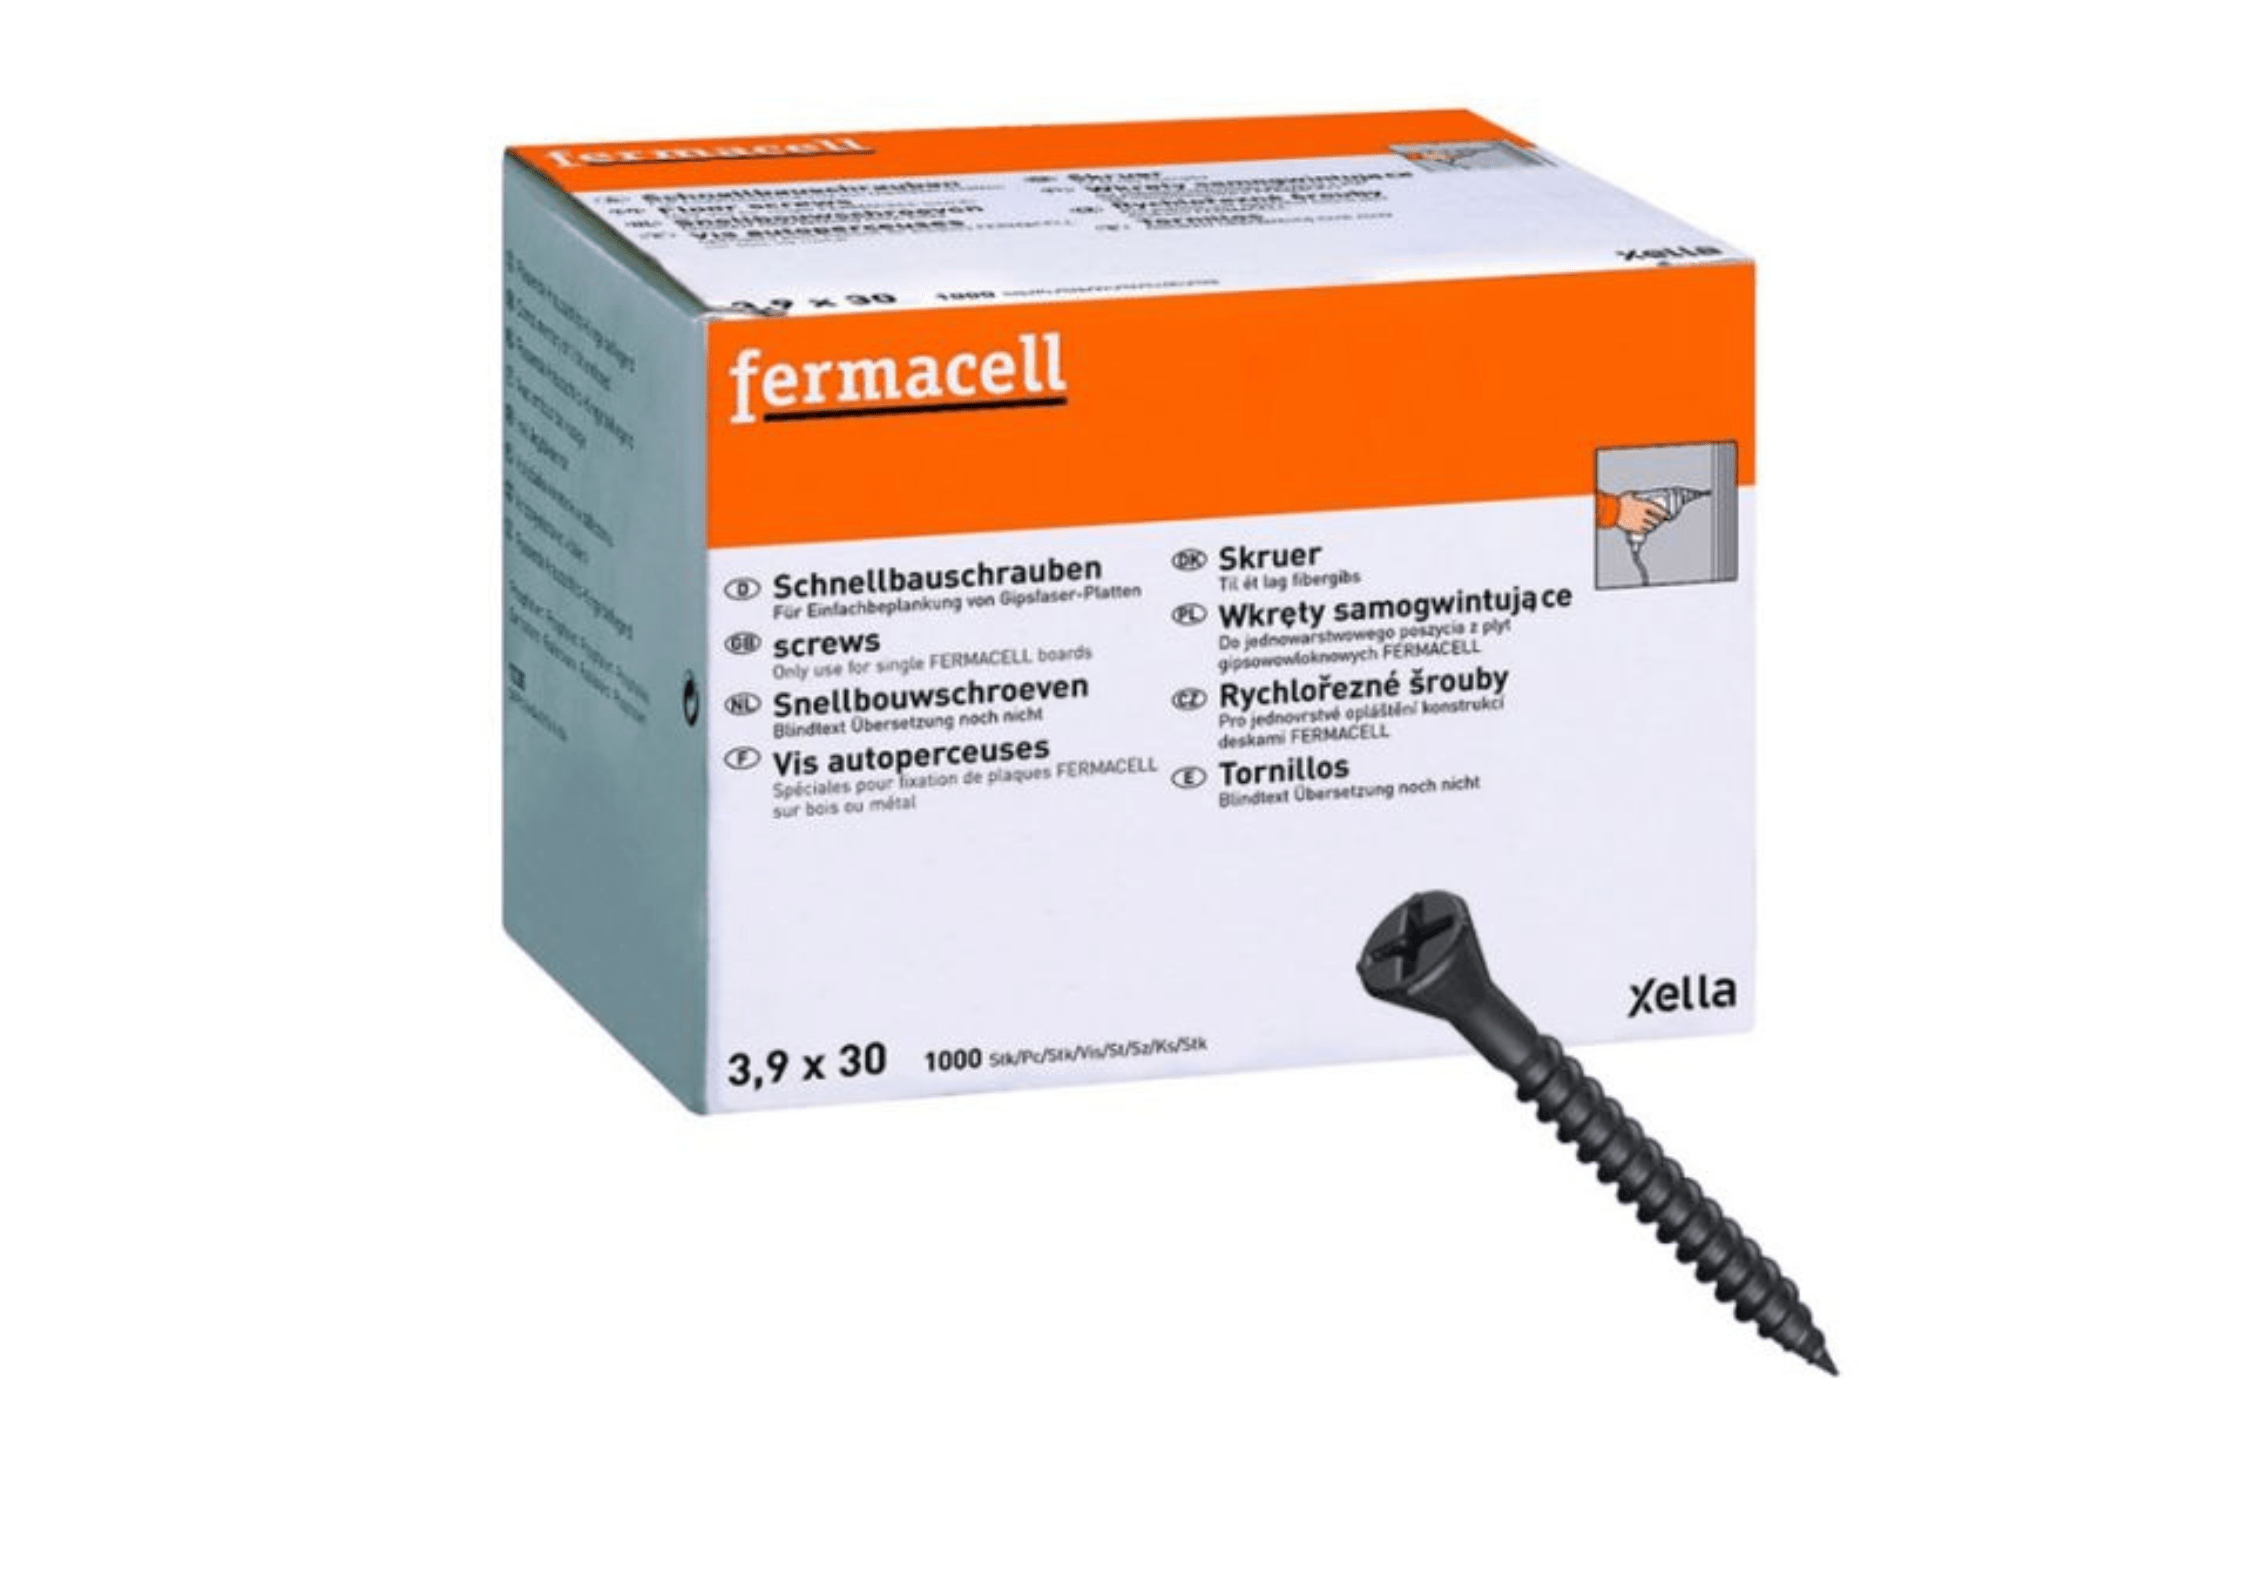 Fermacell screws Fermacell® Screws | 3.9mm x 40mm Box of 1000 (79047) IUK01660 fermacell®  Screws 3.9 x 30mm | insulationuk.co.uk